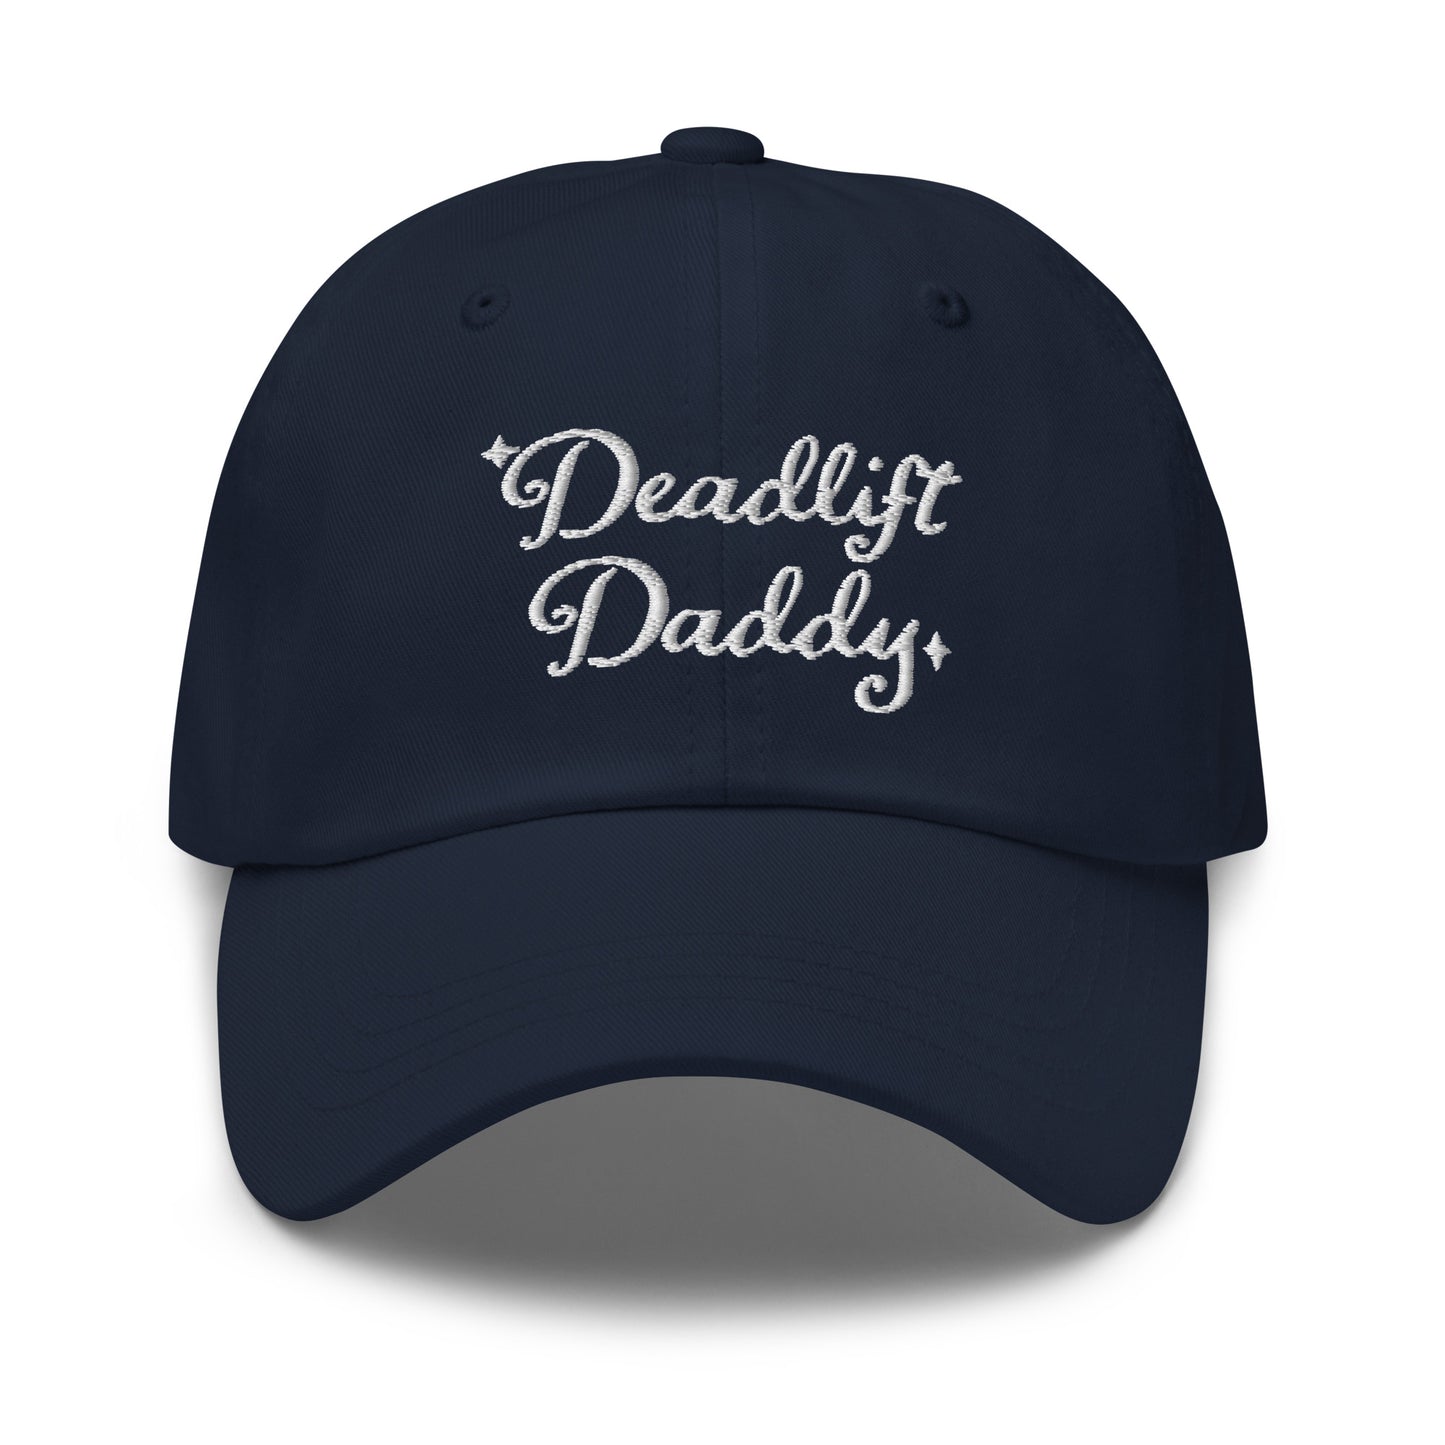 Deadlift Daddy hat